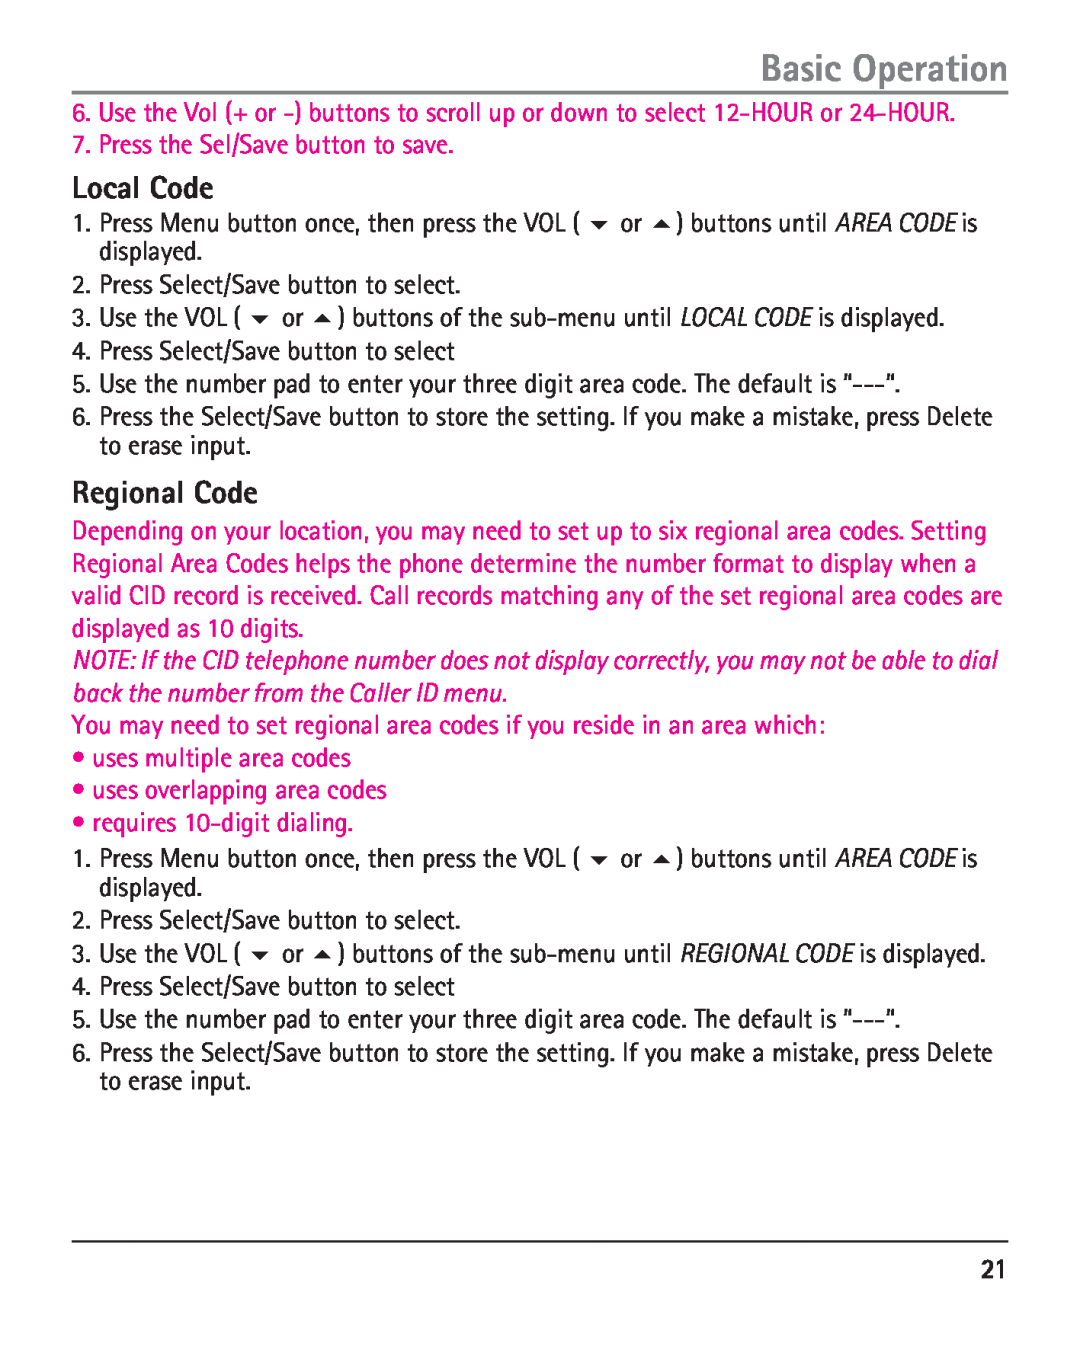 RCA 25420 manual Basic Operation, Local Code, Regional Code 